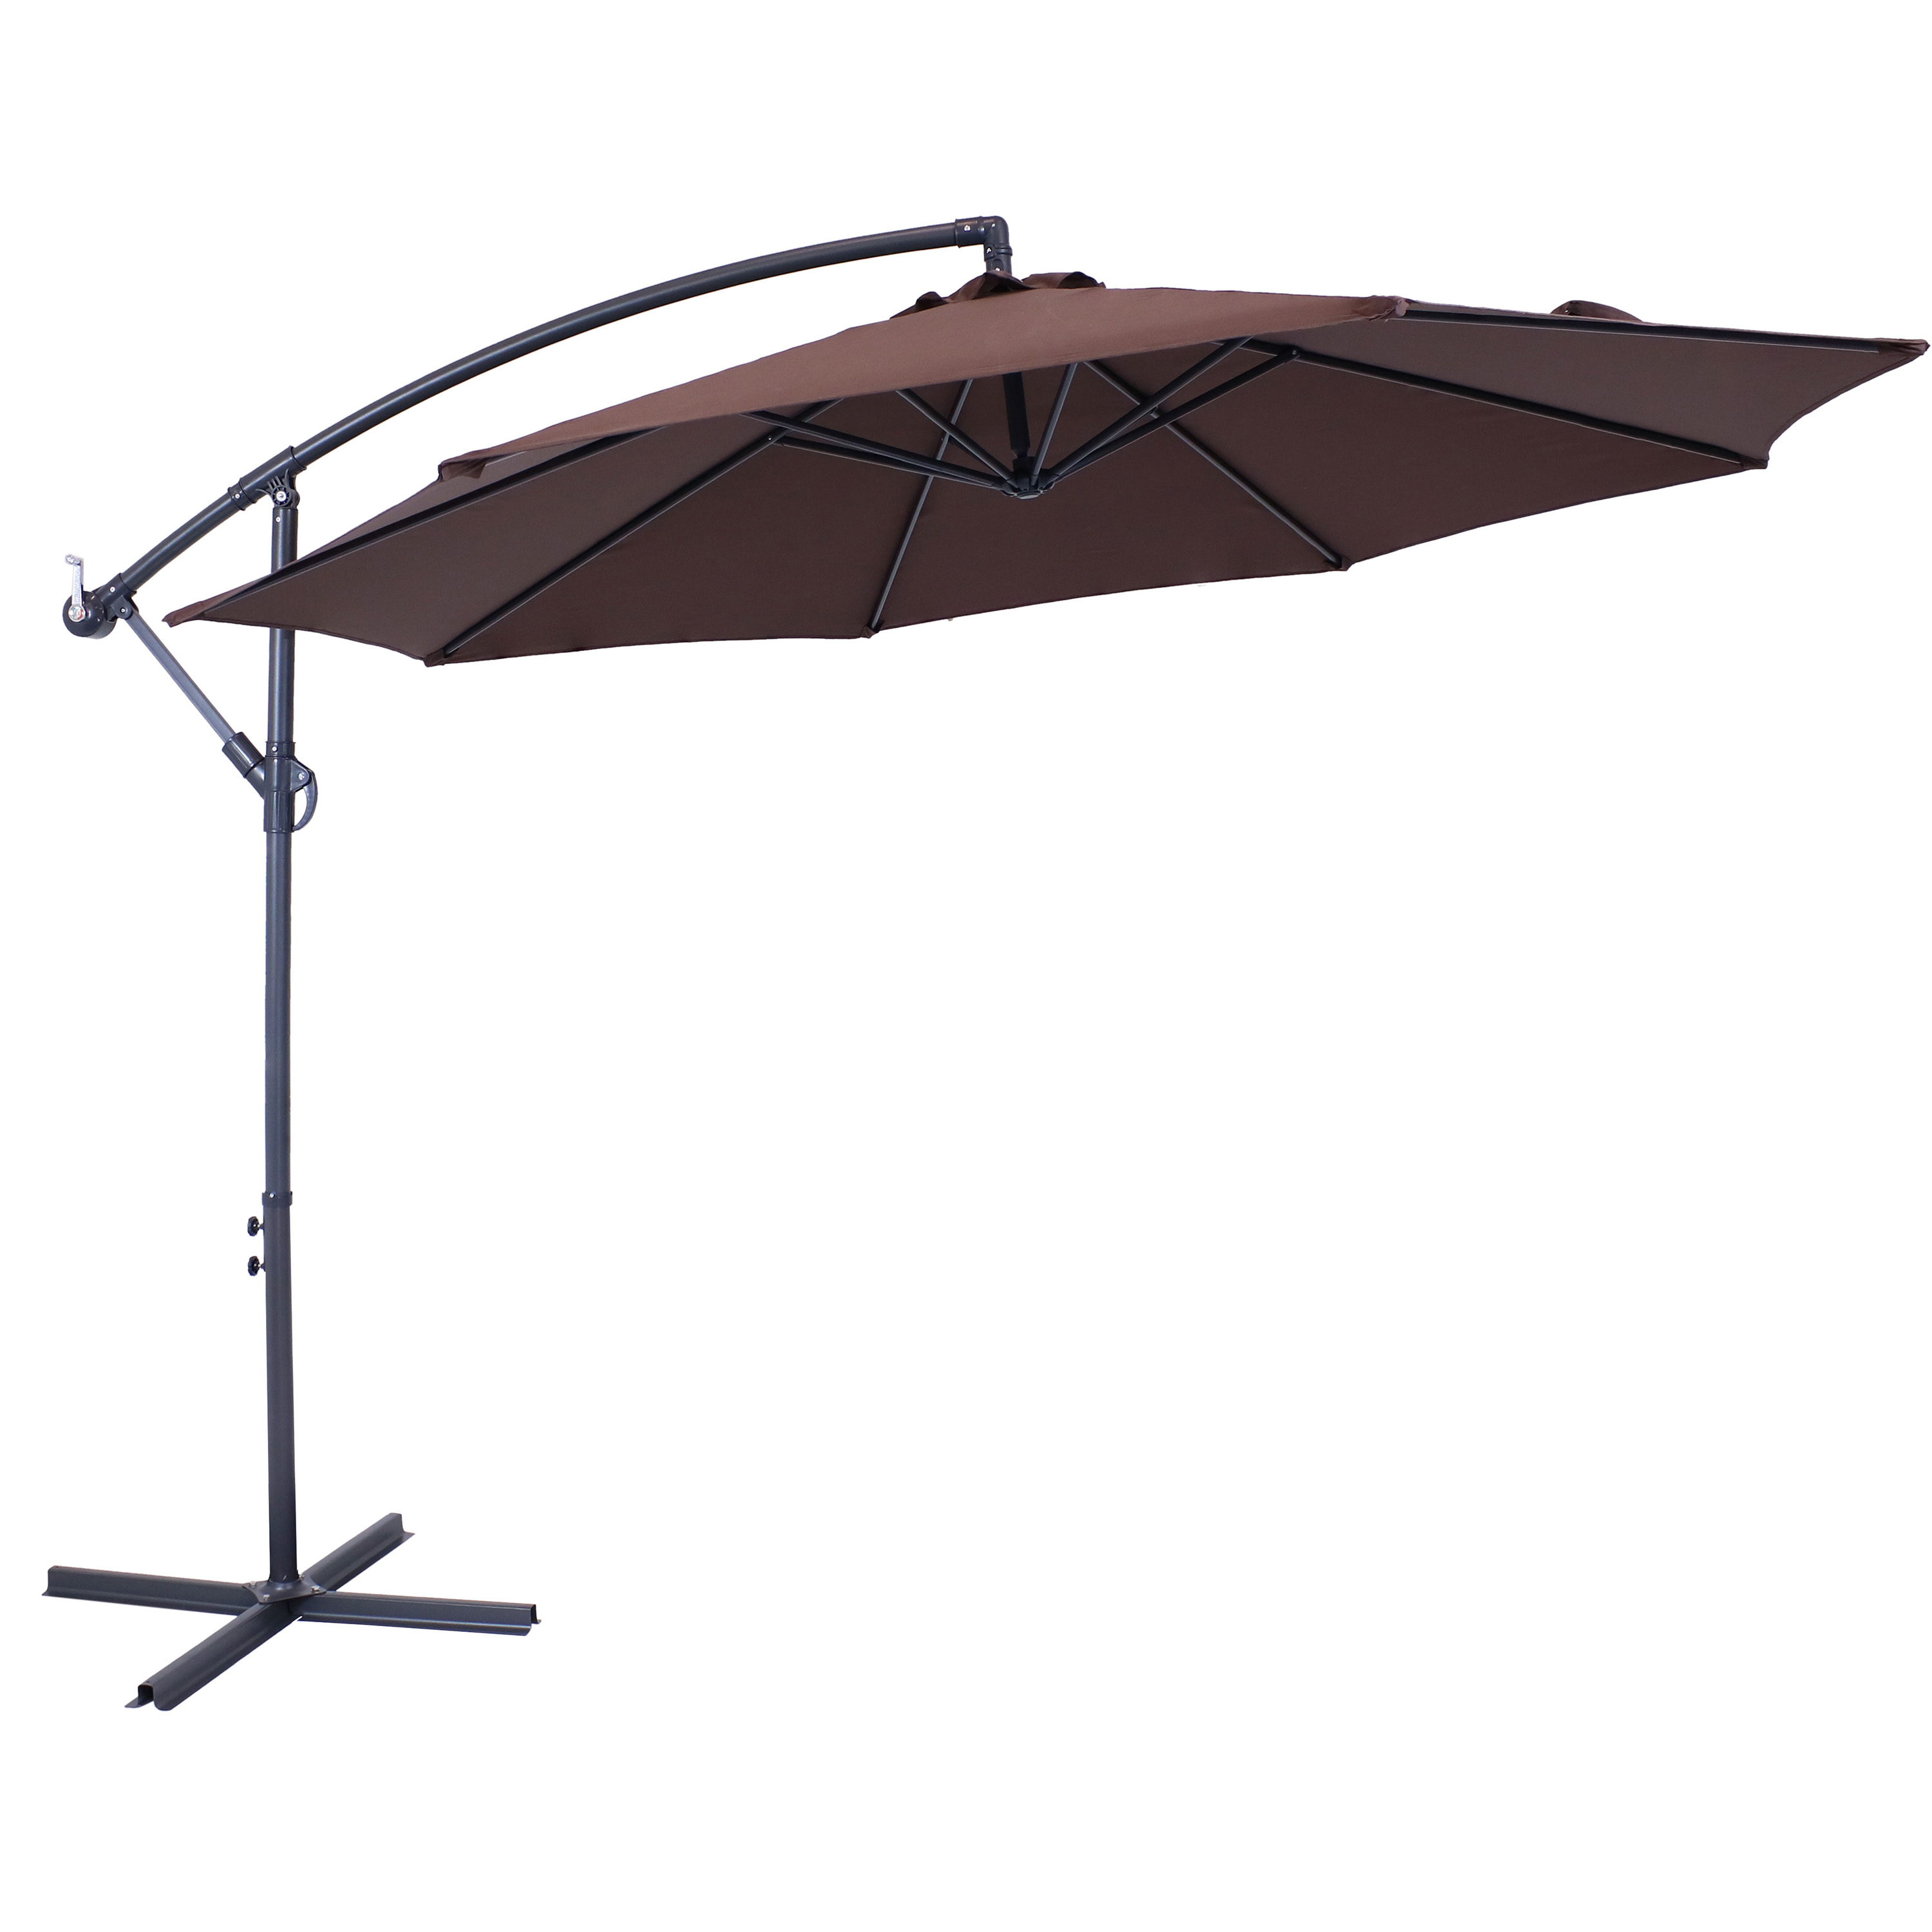 Sunnydaze Steel Offset Patio Umbrella -  Cantilever and Crank - Brown - 10-Foot